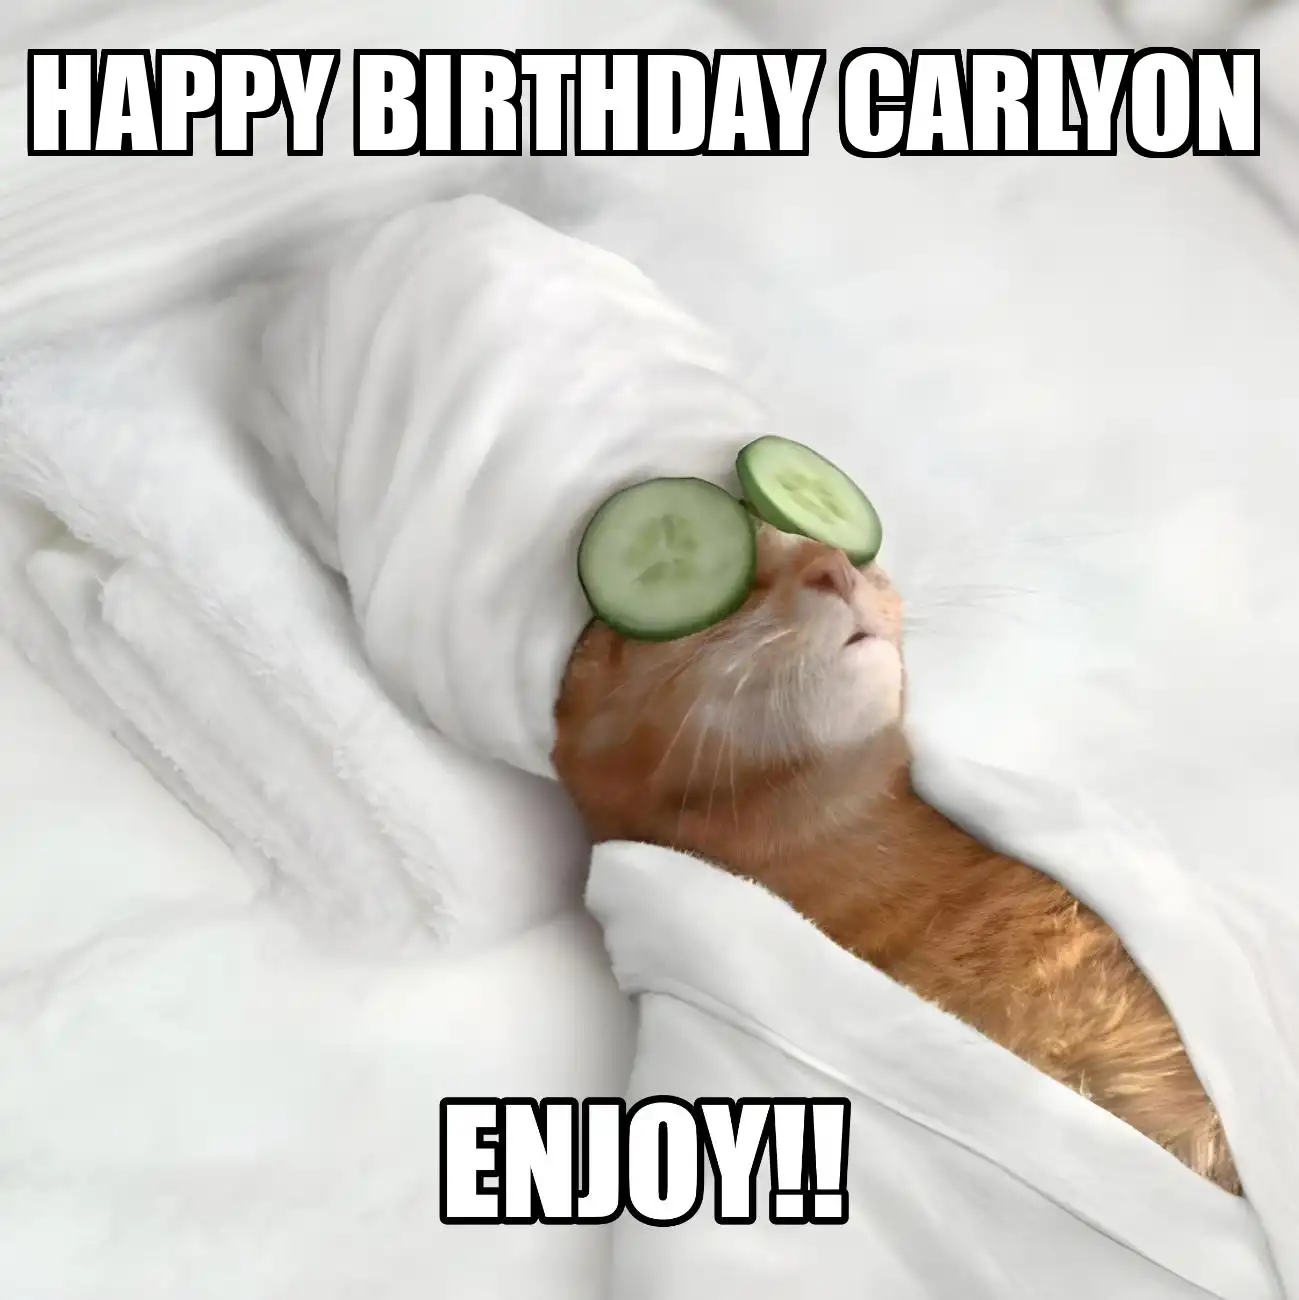 Happy Birthday Carlyon Enjoy Cat Meme